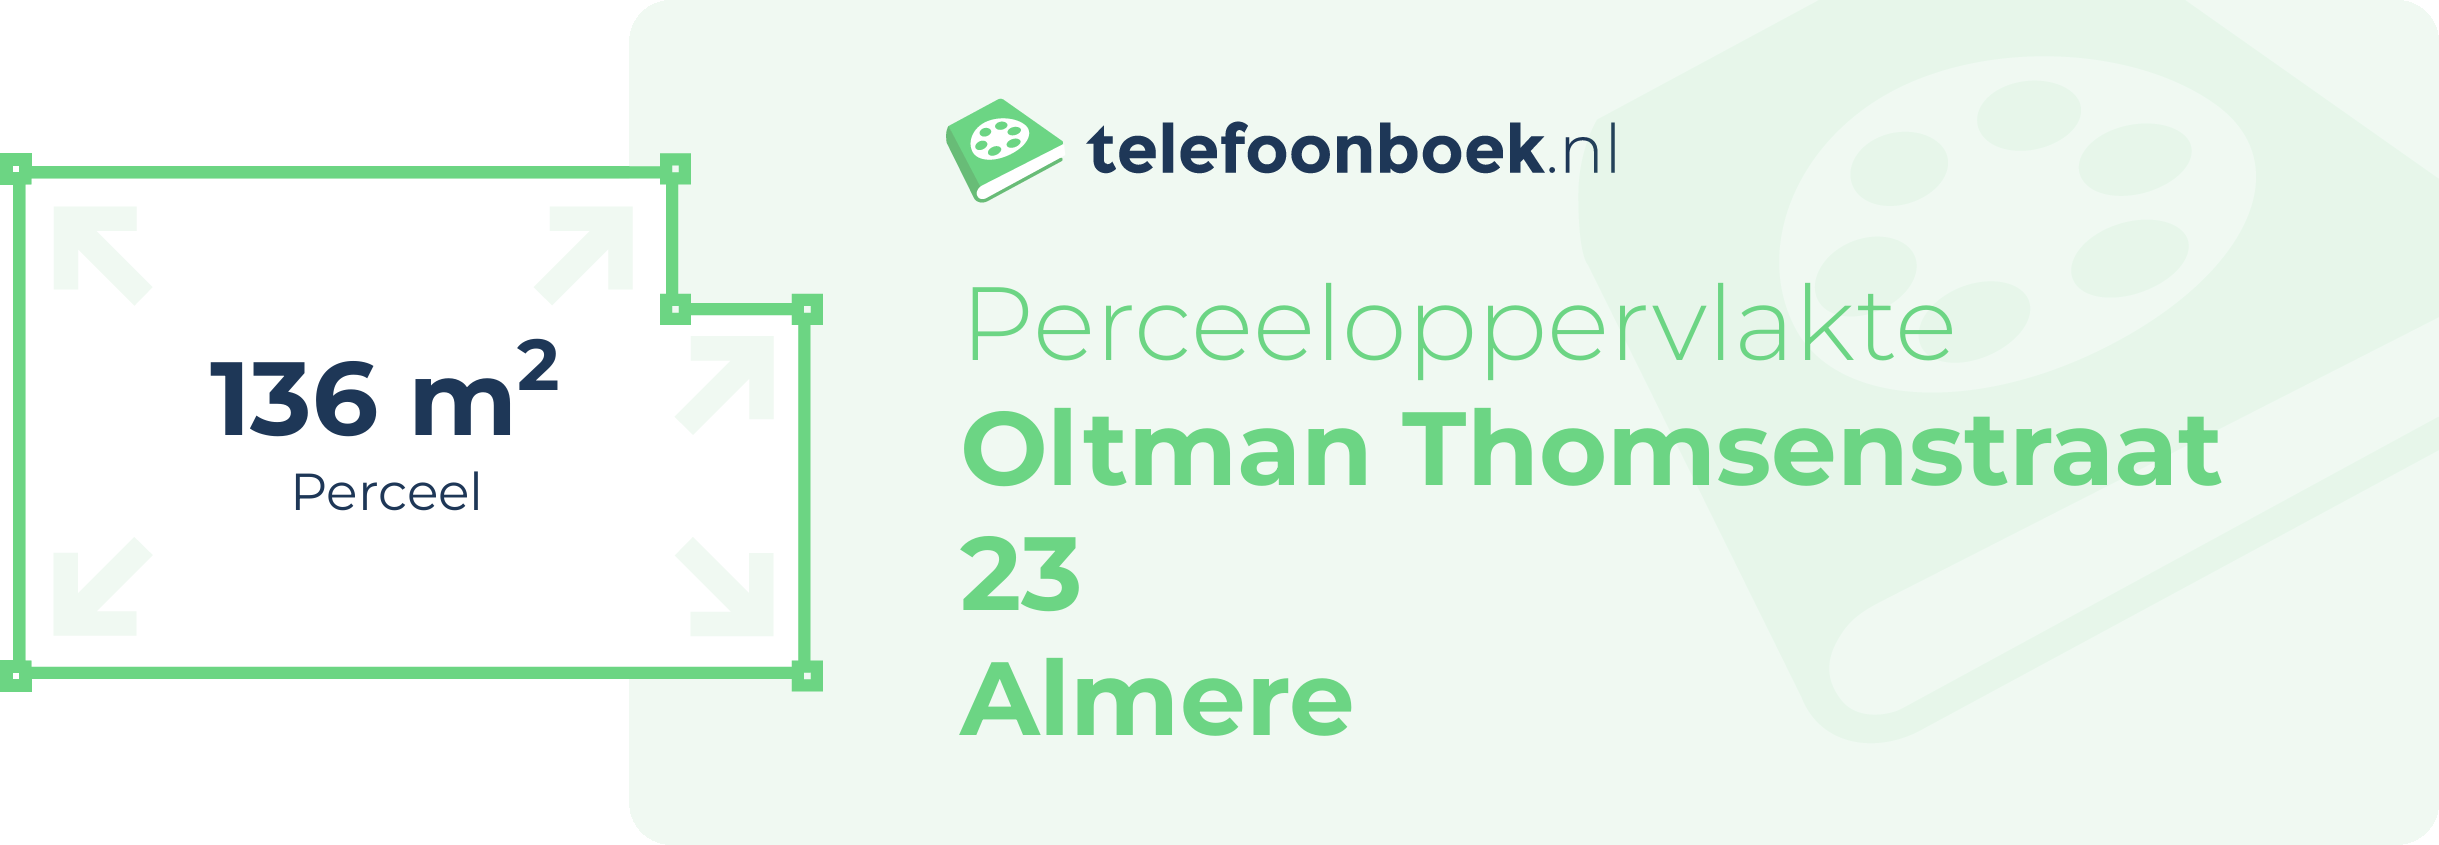 Perceeloppervlakte Oltman Thomsenstraat 23 Almere